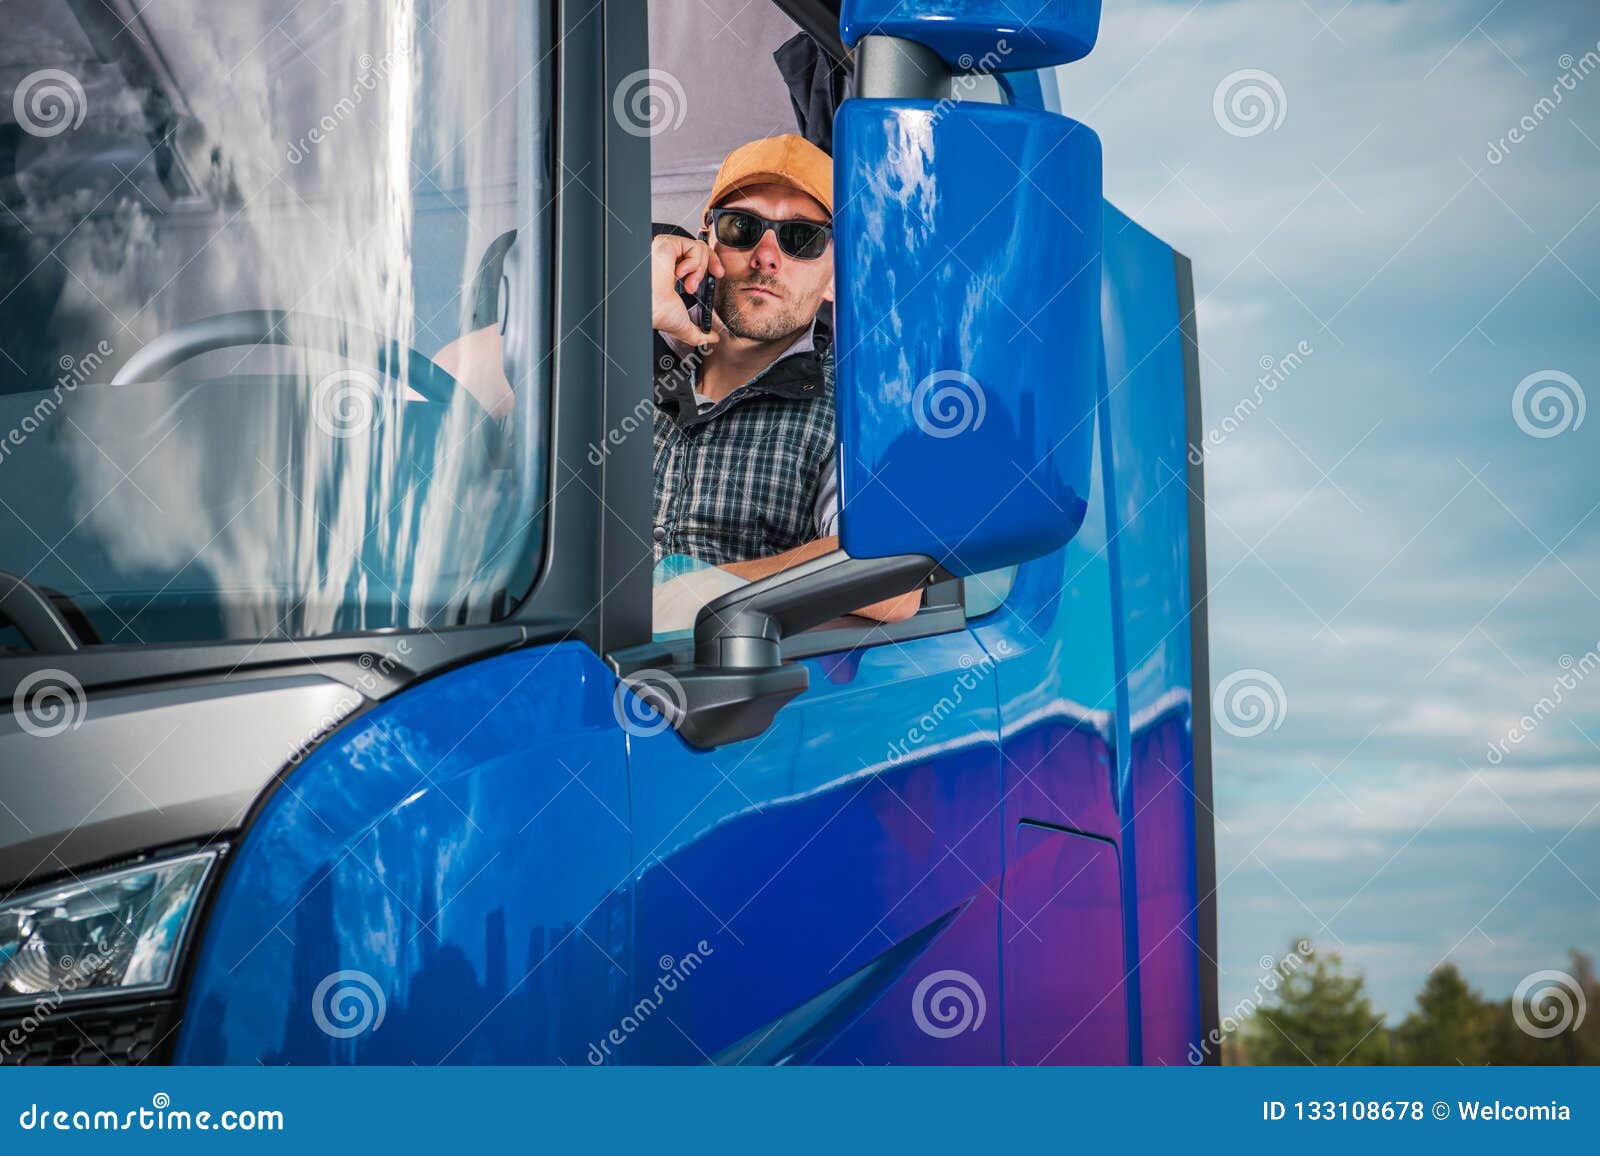 truck driver phone call